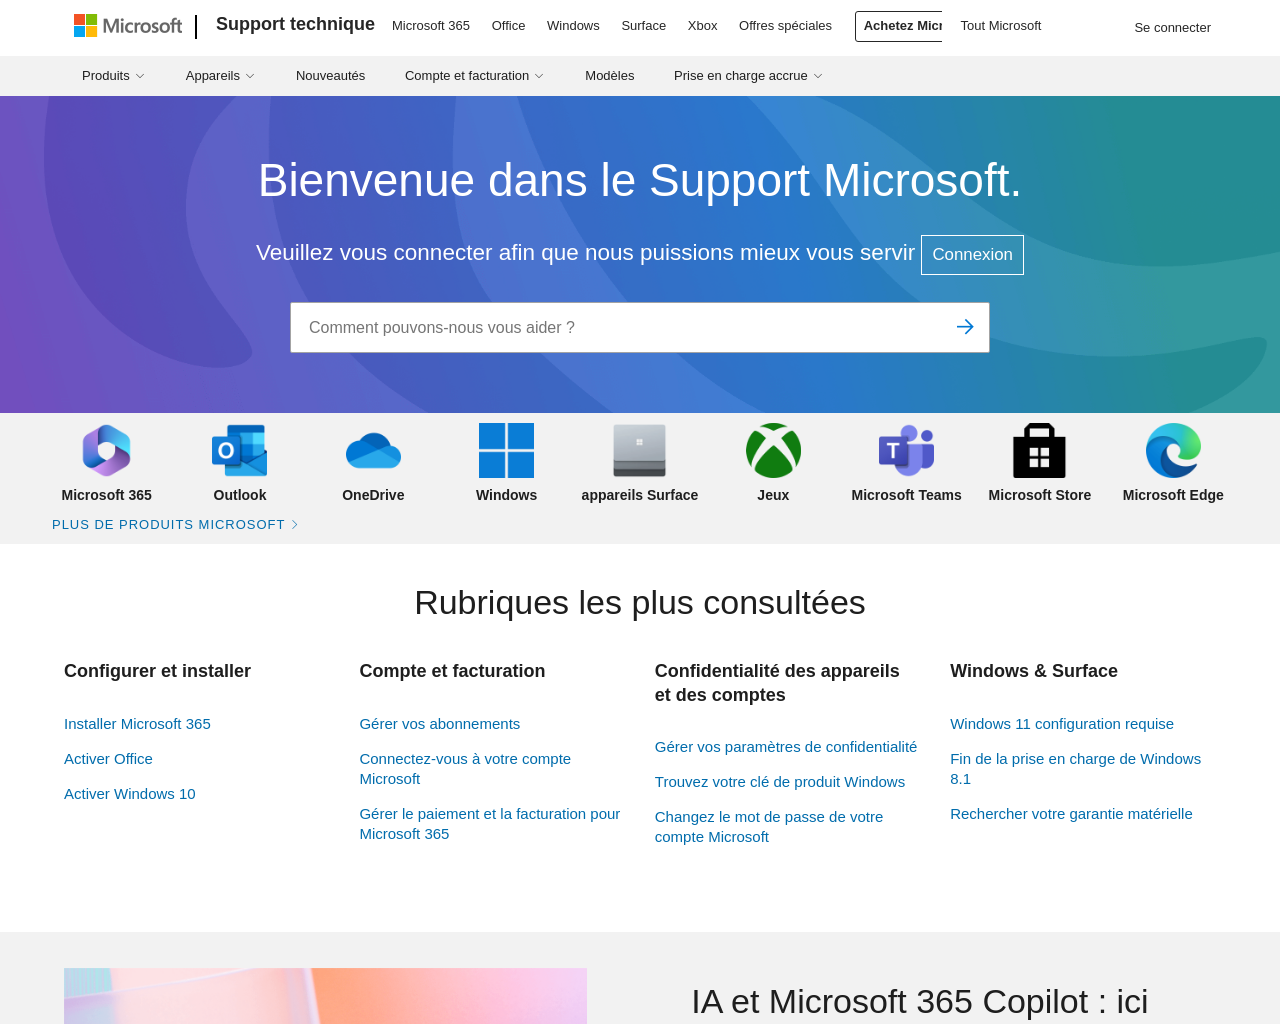 support.microsoft.com